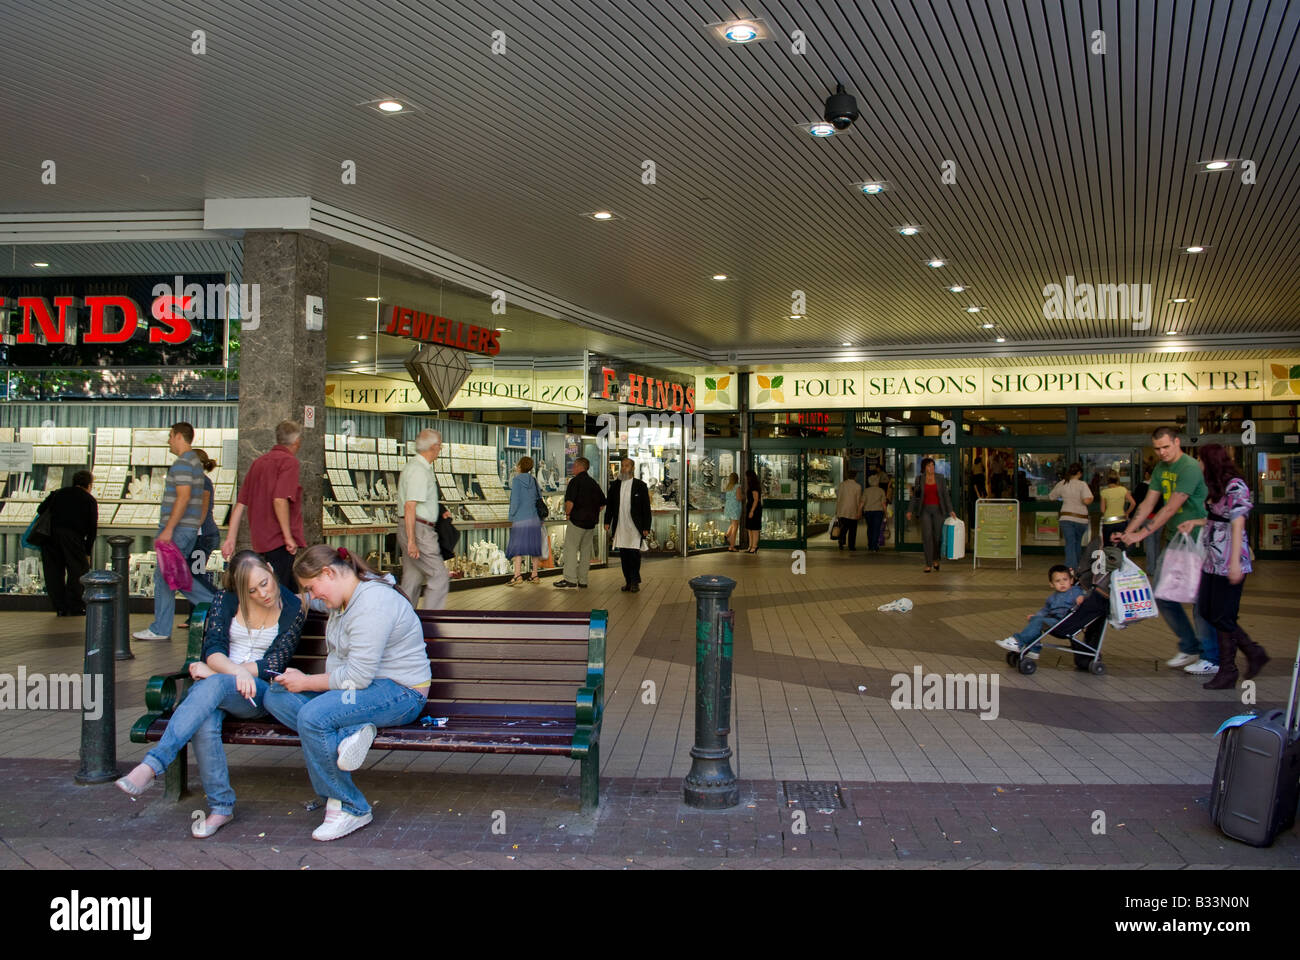 Four seasons shopping centre, Mansfield, Notts Stock Photo - Alamy